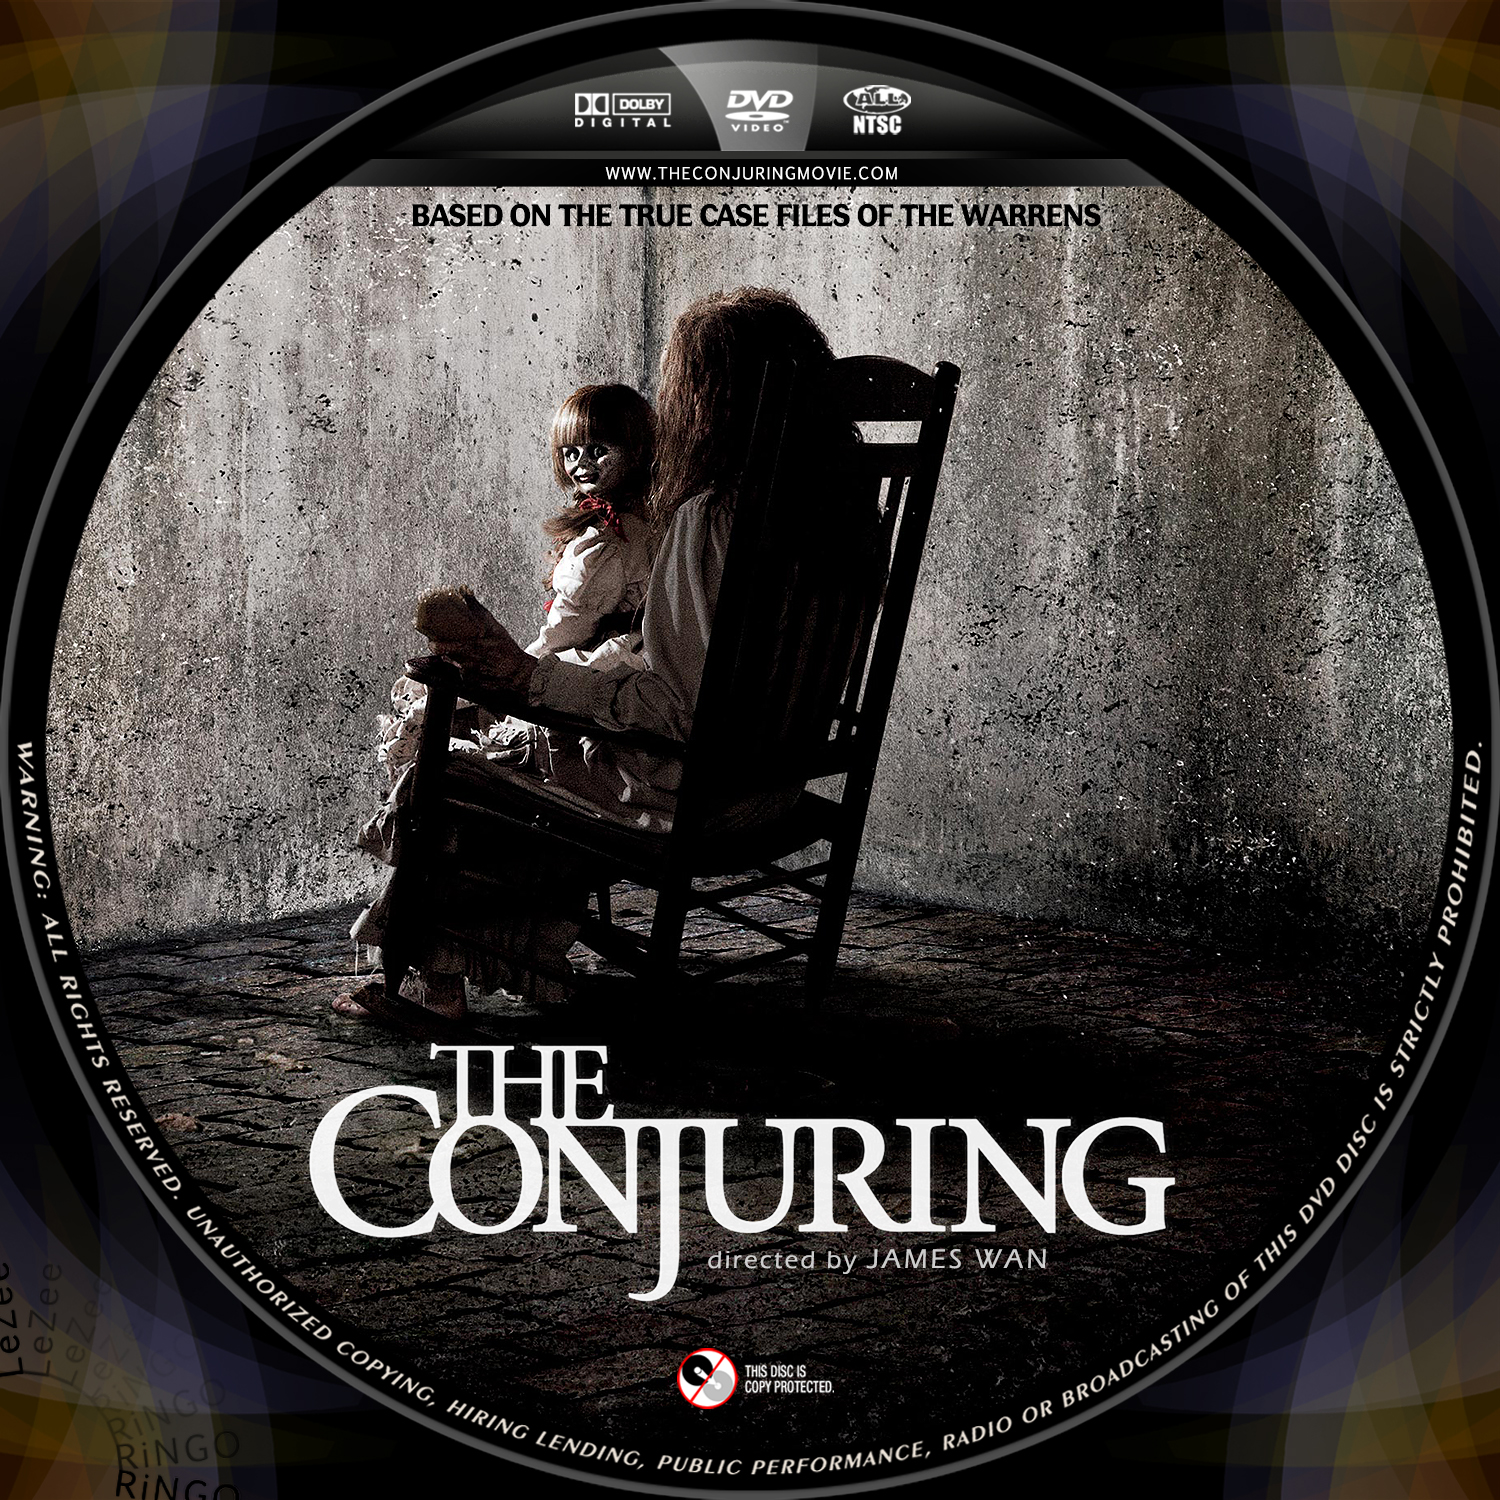 Conjuring перевод. The Conjuring 1 обложка. The Conjuring (2013) Cover. Conjuring Trilogy DVD Cover. The Conjuring turkce Dublaj.